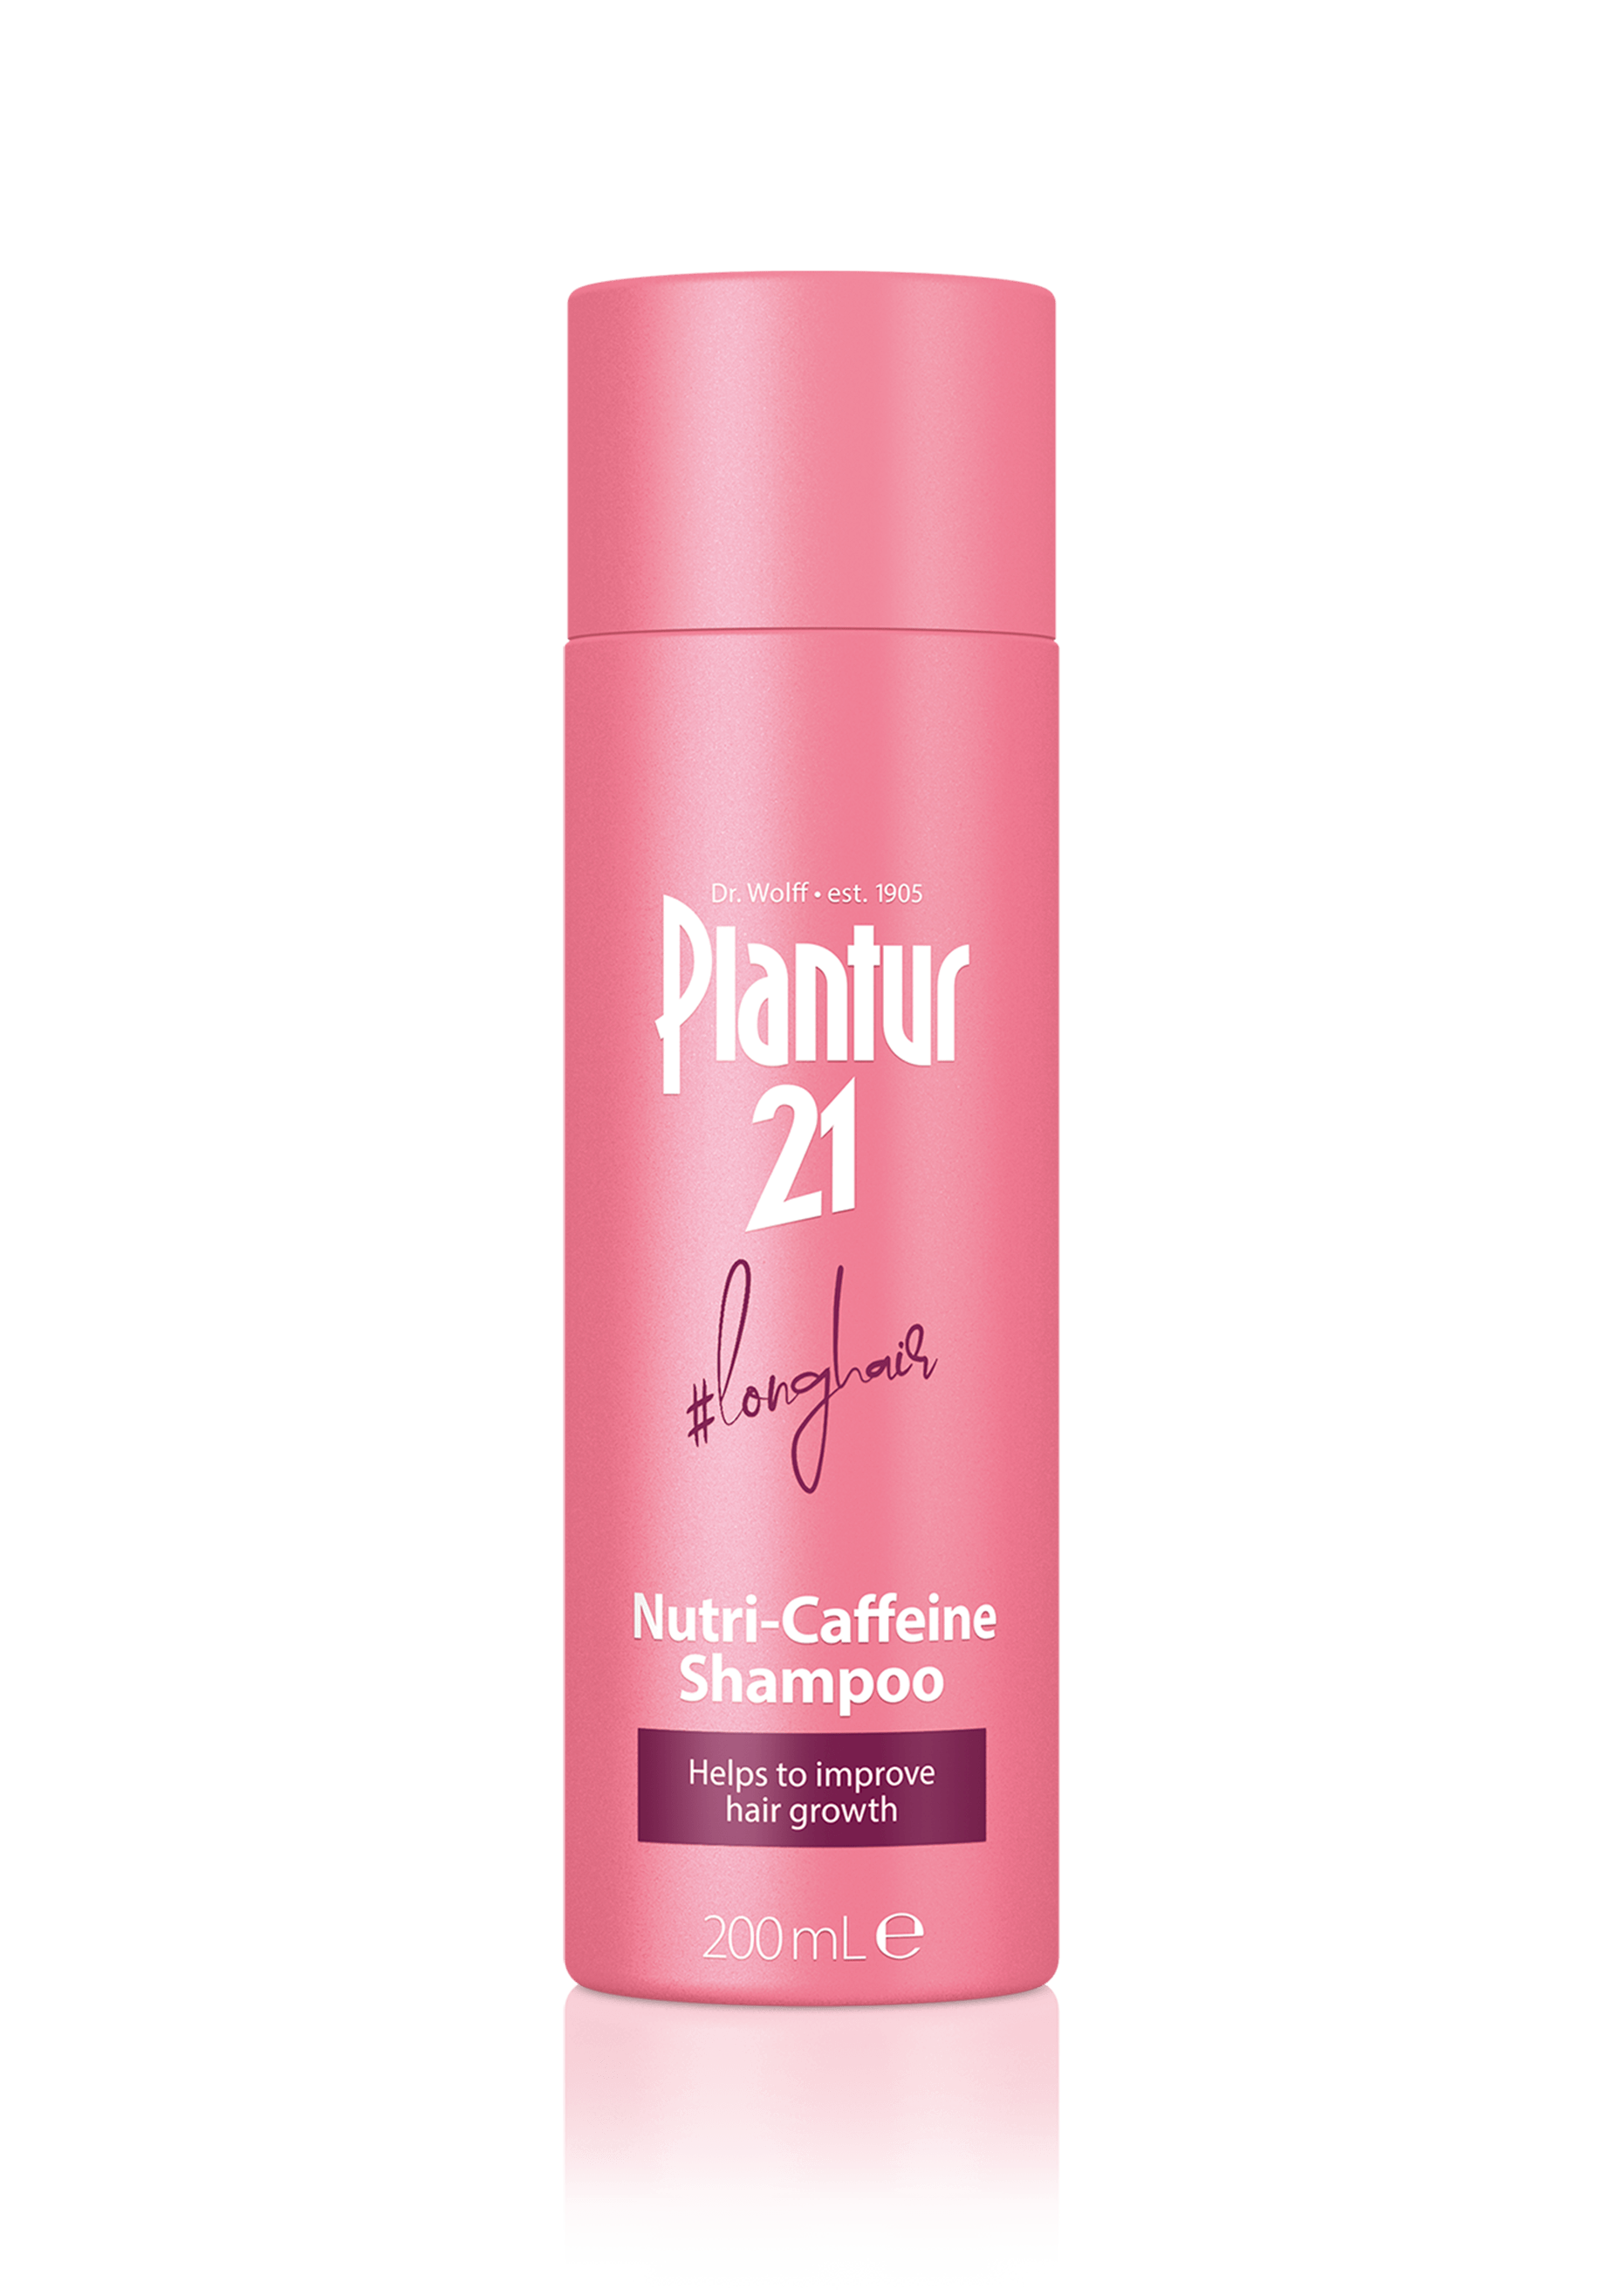 Plantur 21 #longhair Nutri-Caffeine Shampoo - For impatient heads